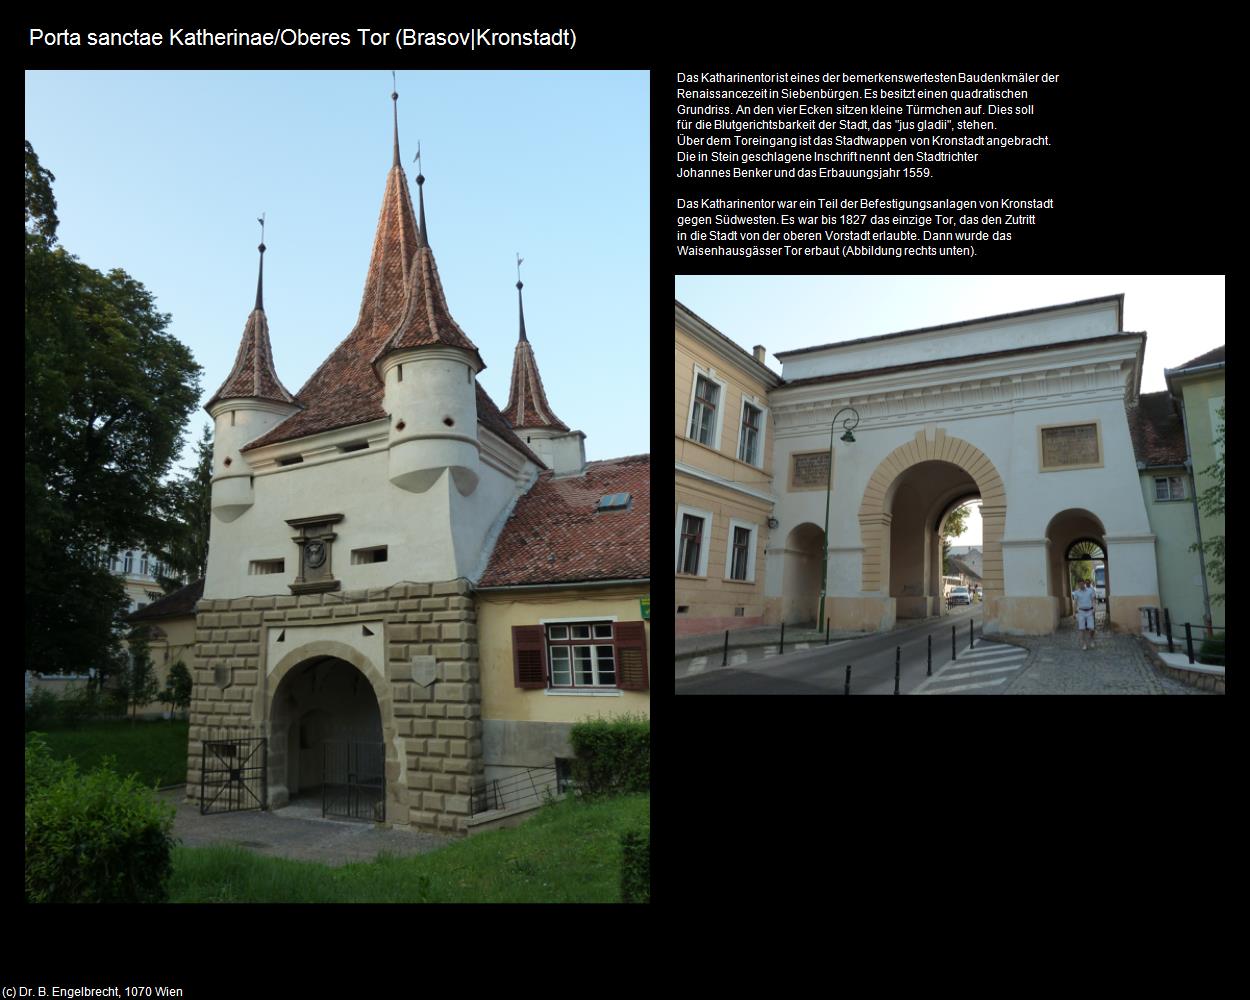 Porta sanctae Katherinae/Oberes Tor (Brasov|Kronstadt) in RUMÄNIEN